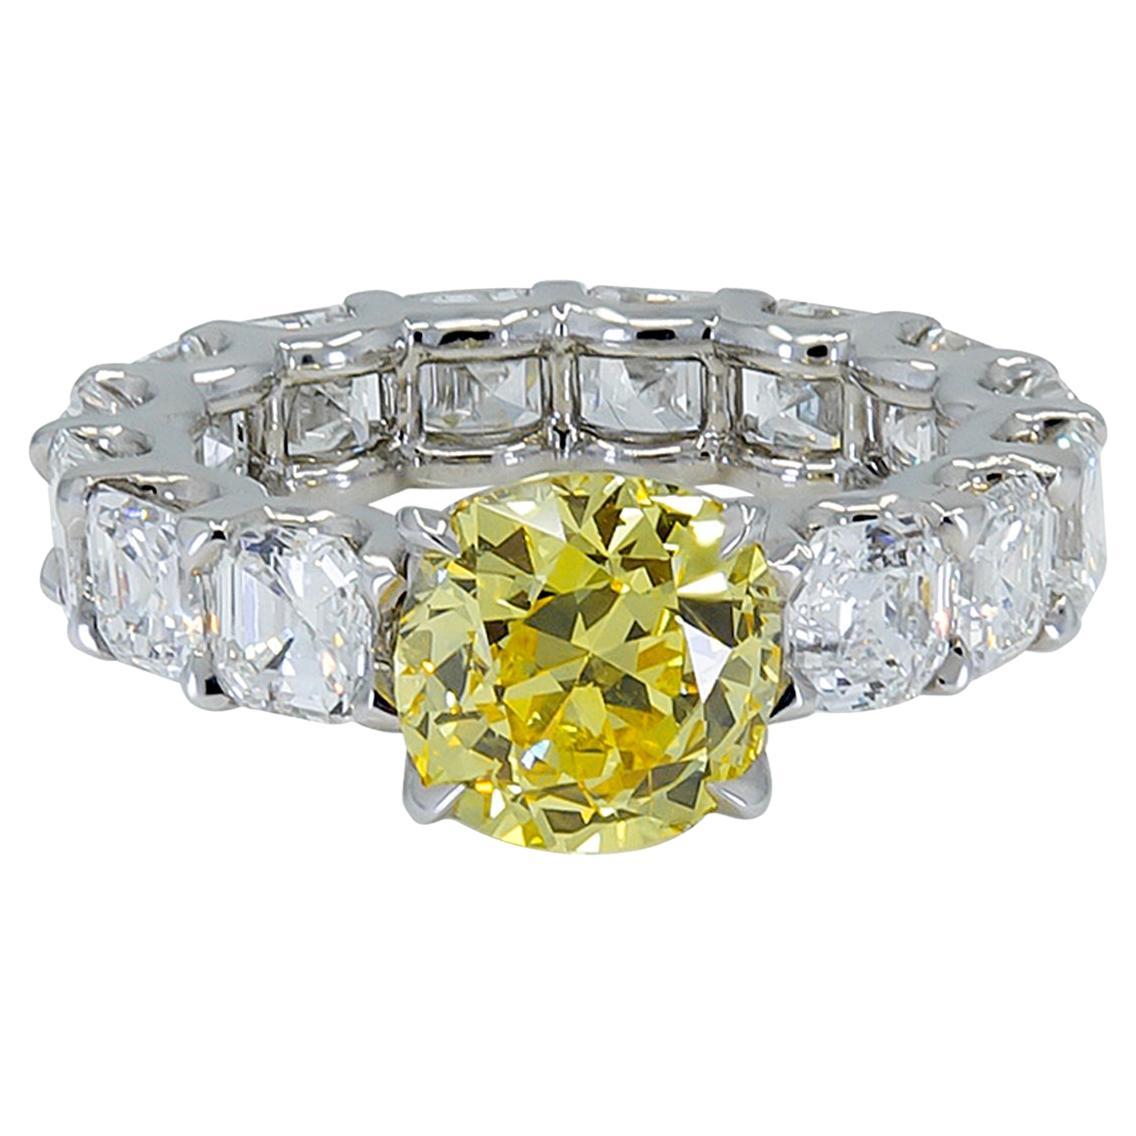 Spectra Fine Jewelry GIA Certified 3.02 Carat Fancy Vivid Yellow Diamond Ring For Sale